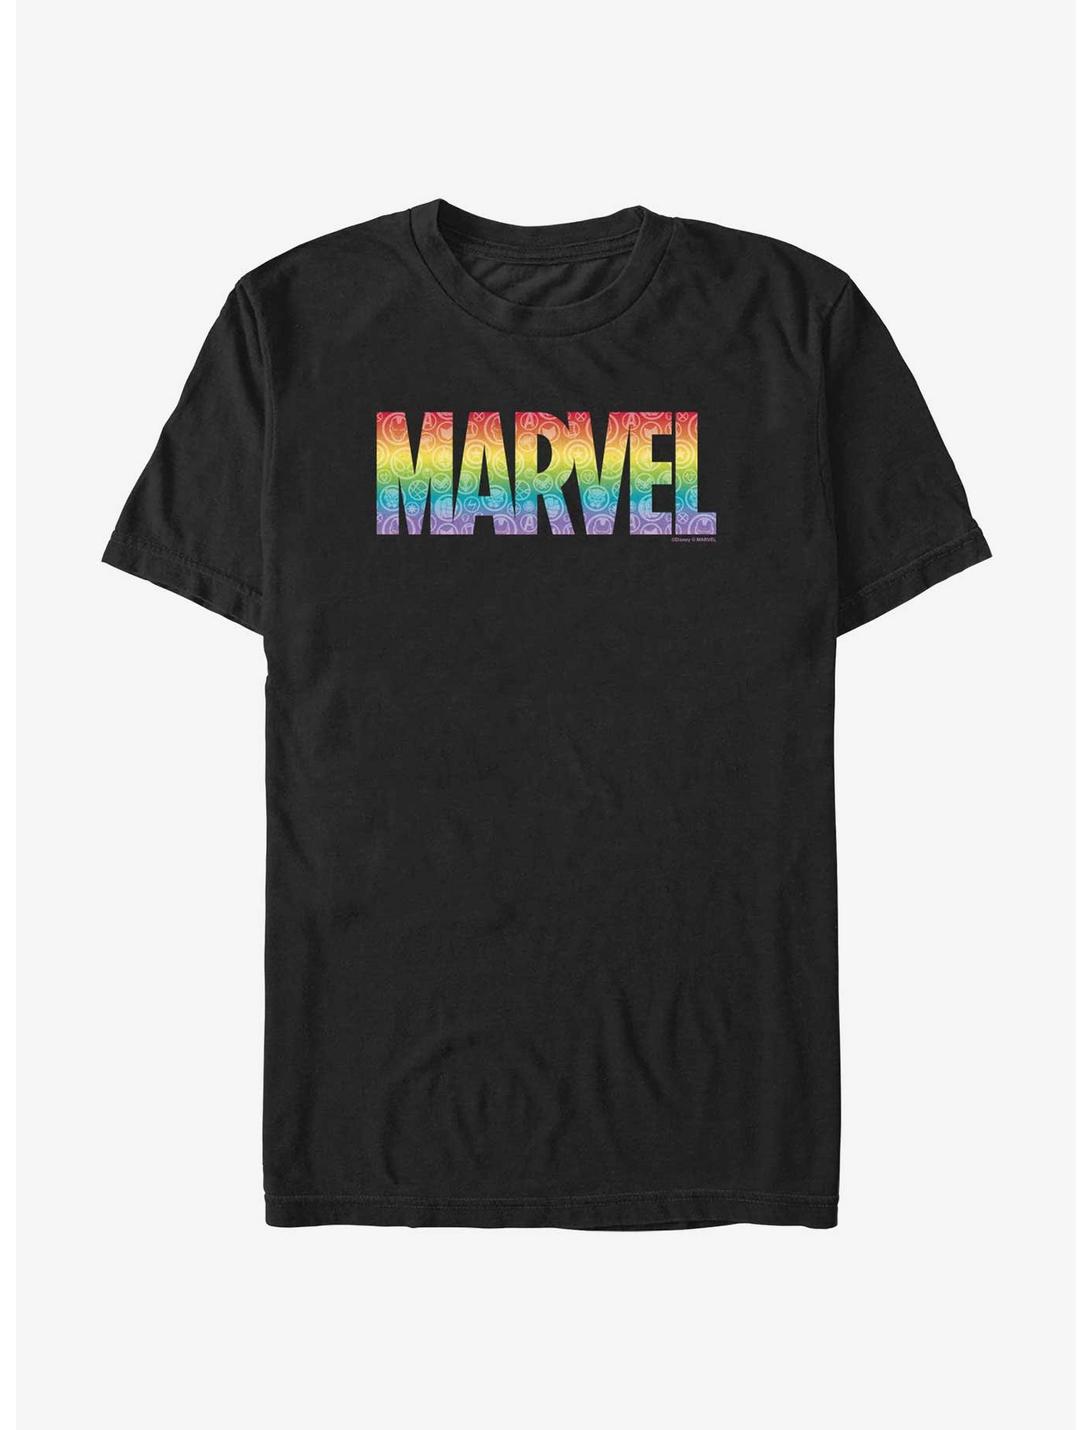 Marvel Avengers Multiple Rainbows Pride T-Shirt, BLACK, hi-res